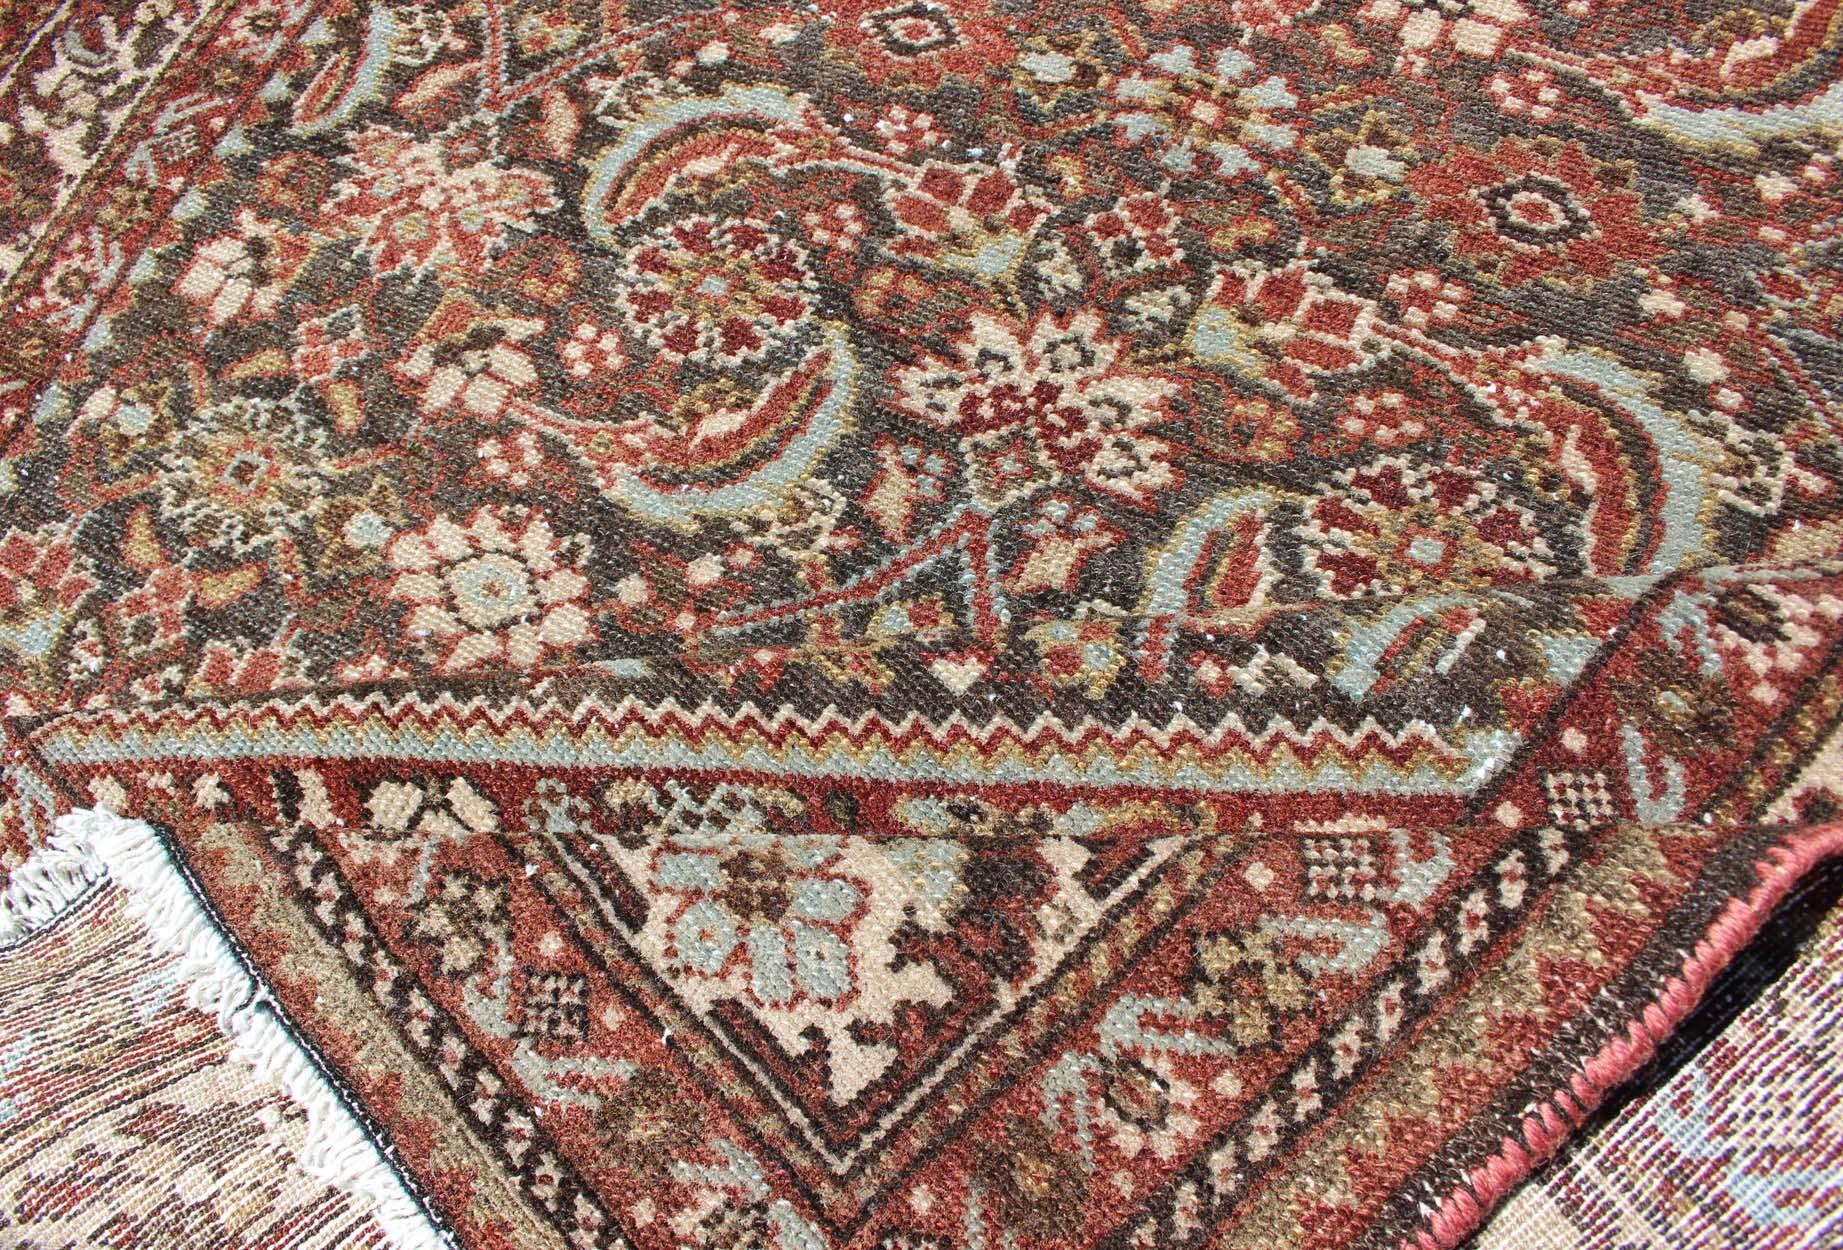 Wool Antique Persian Hamadan Rug with Colorful Geometric Design